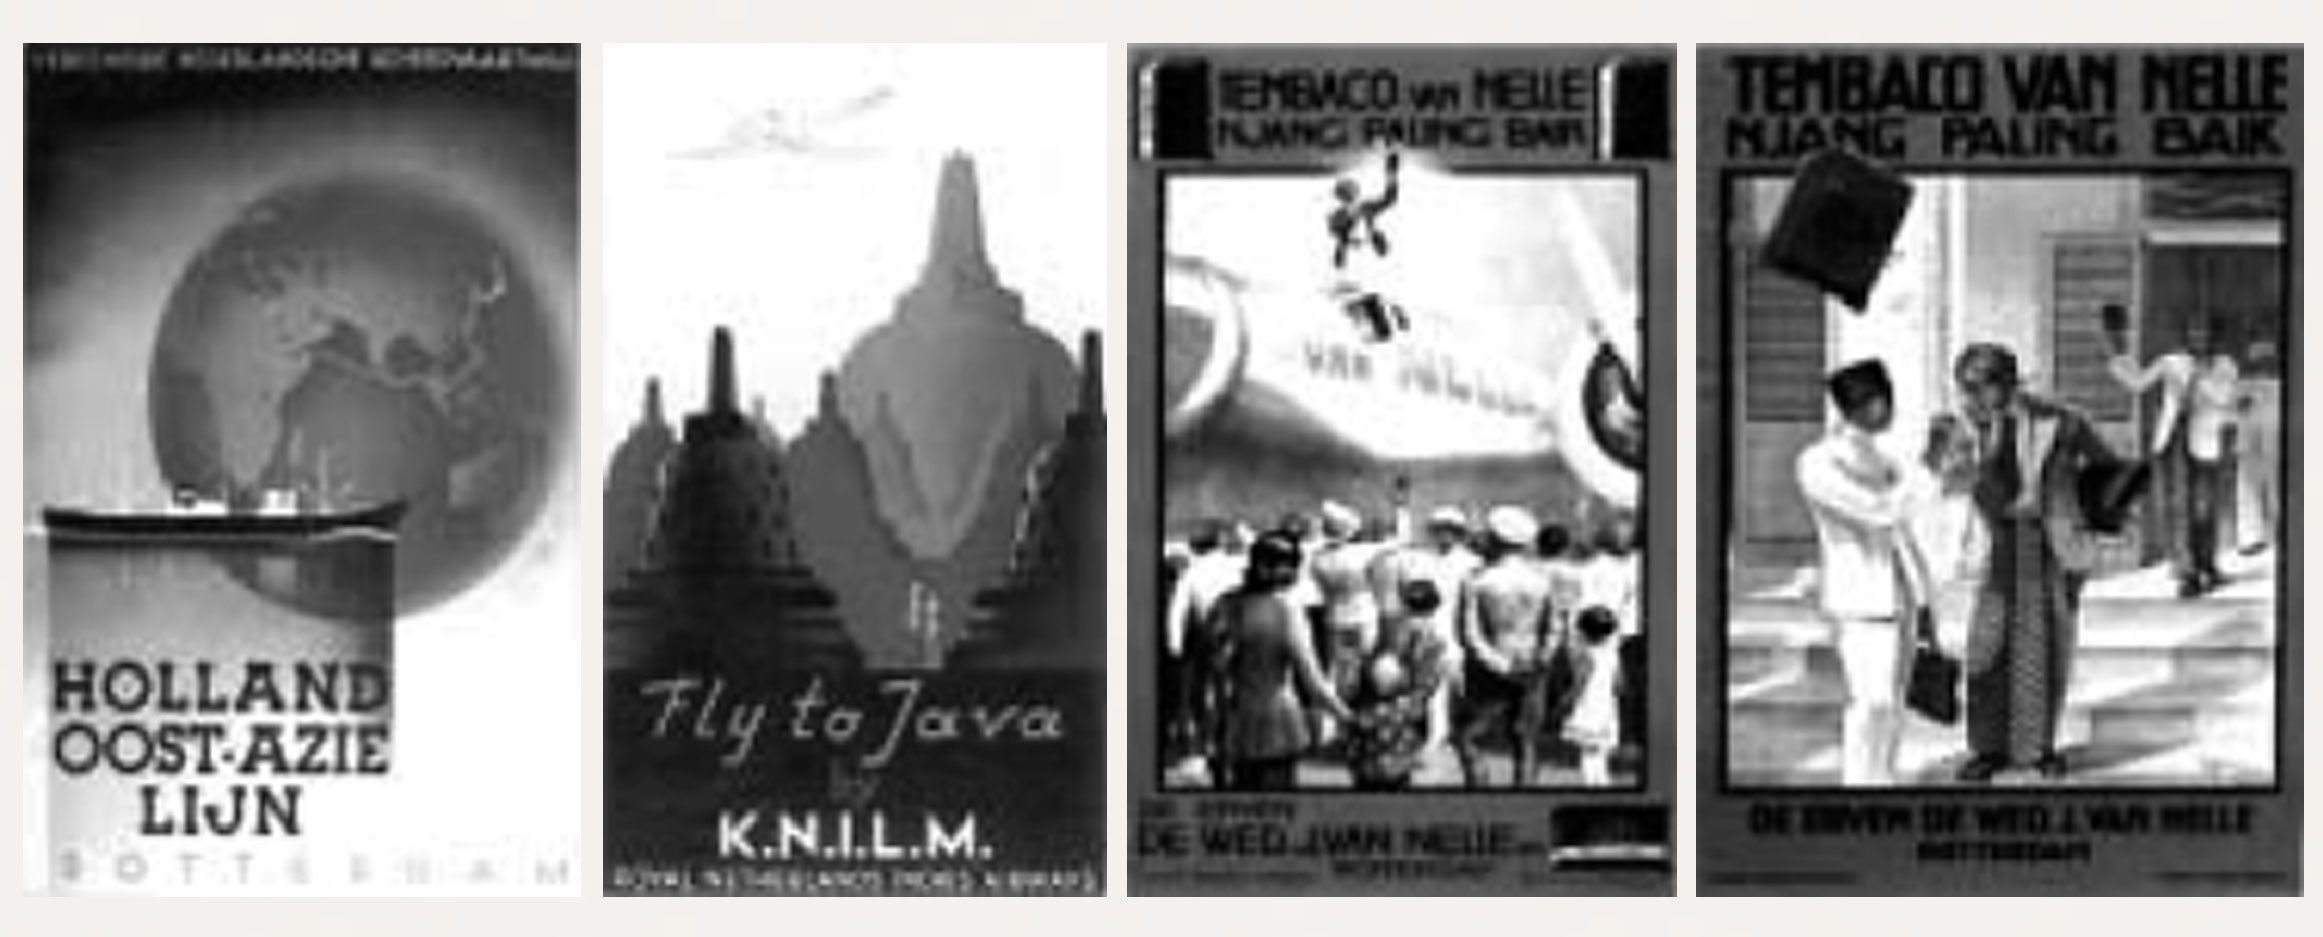 Gambar 2. (a & b) Iklan wisata "Holland Oost-Azie Lijn" karya J.Lavies tahun 1937 dan iklan wisata "Fly to Java by KNILM" karya J. Lavies tahun 1937; (c & d) Iklan "Tembaco van Nelle" karya M. van Meerteren Brouwer tahun 1932.